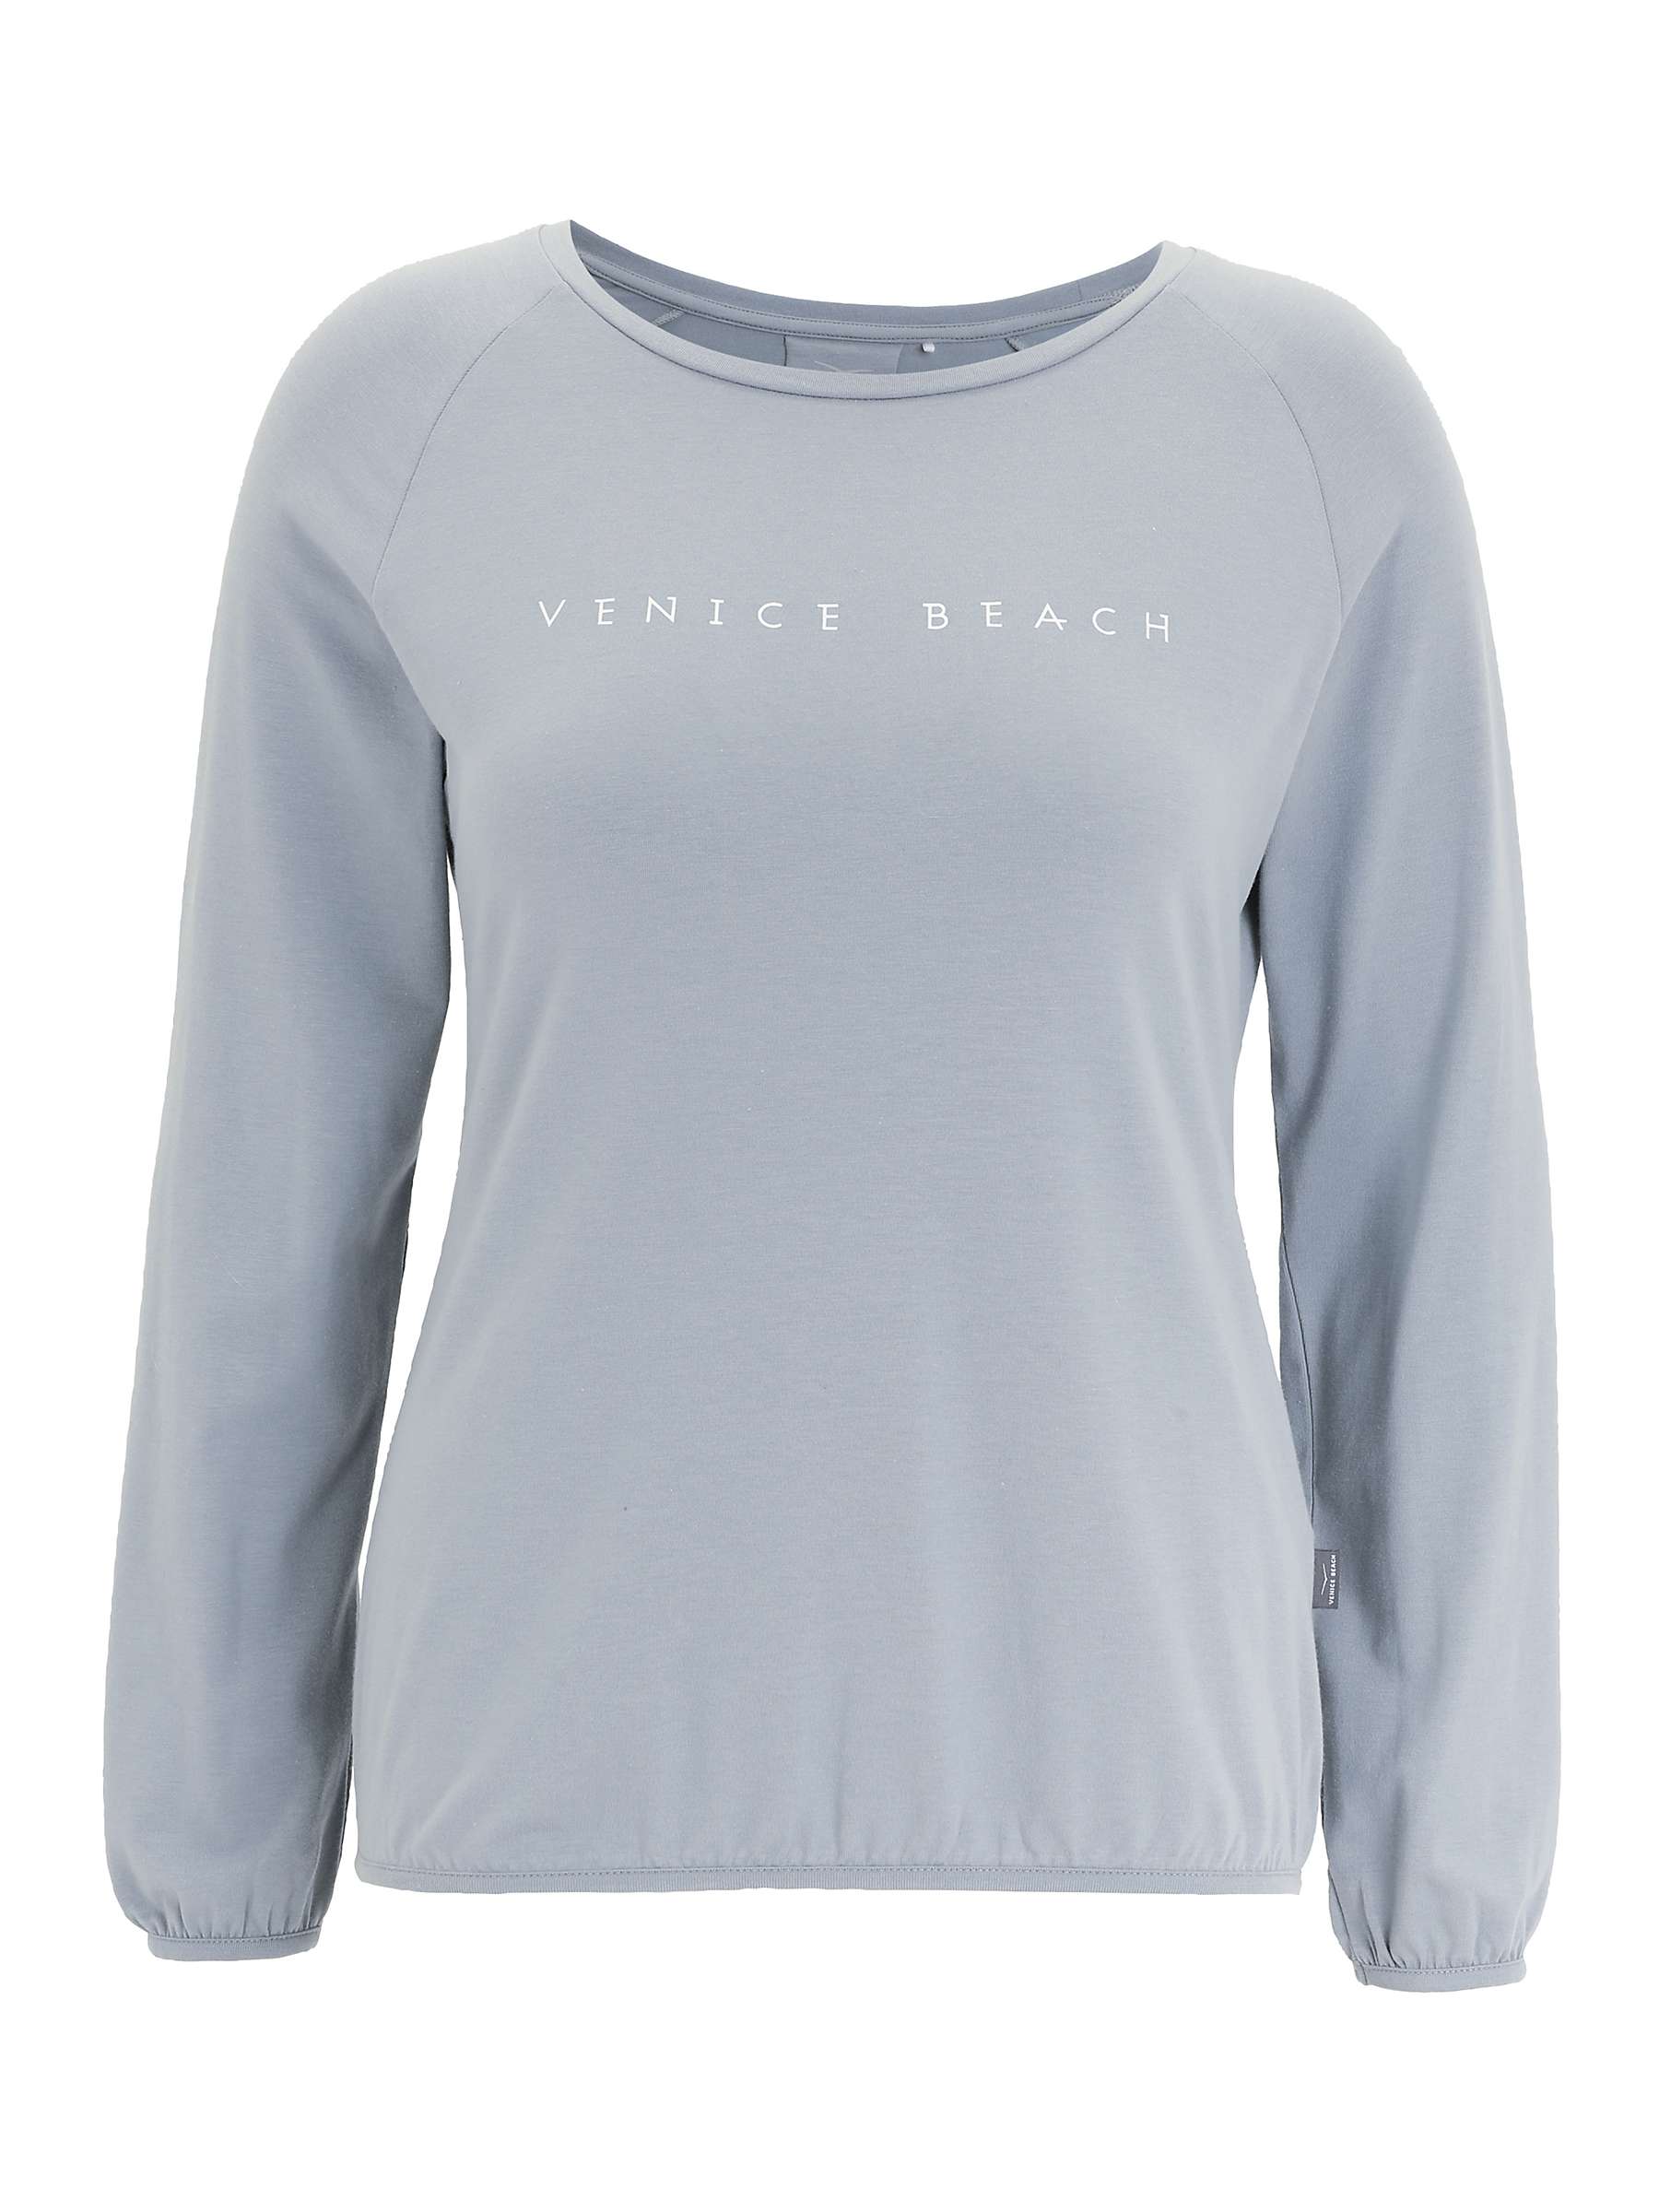 Buy Venice Beach Rylee Sweatshirt Online at johnlewis.com